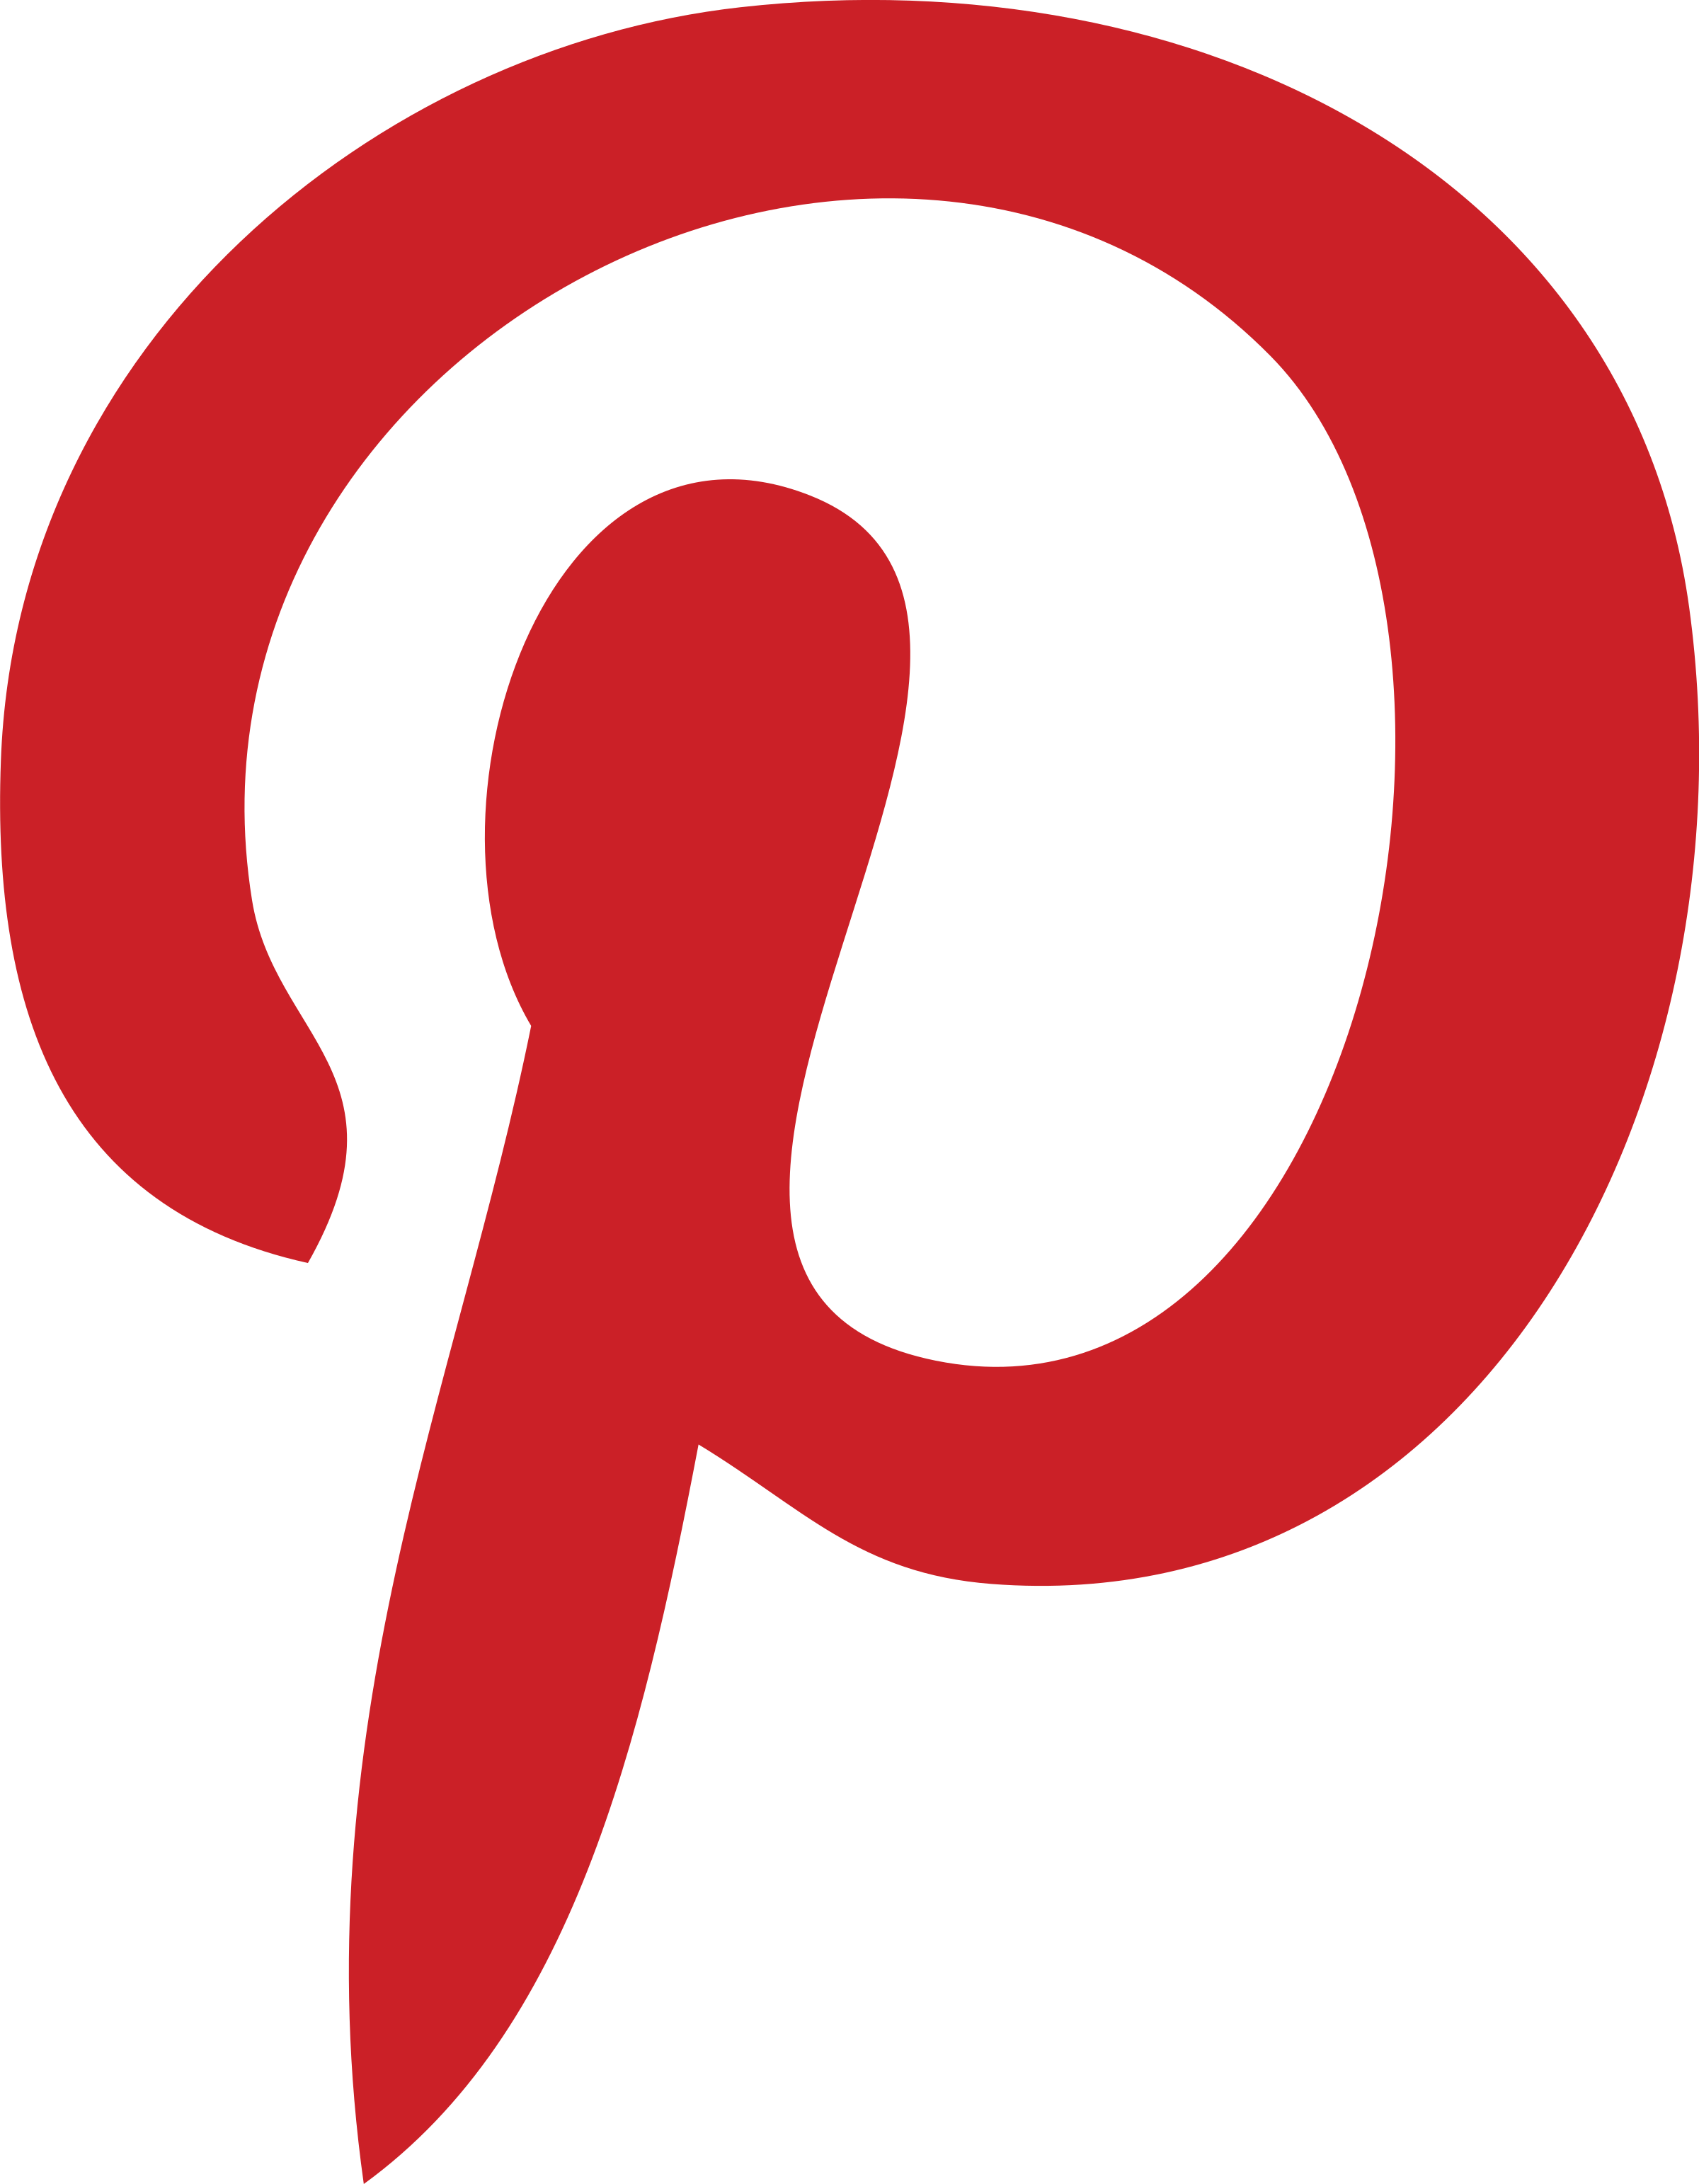 Pinterets Logo - Pinterest 2 Logo PNG Transparent & SVG Vector - Freebie Supply